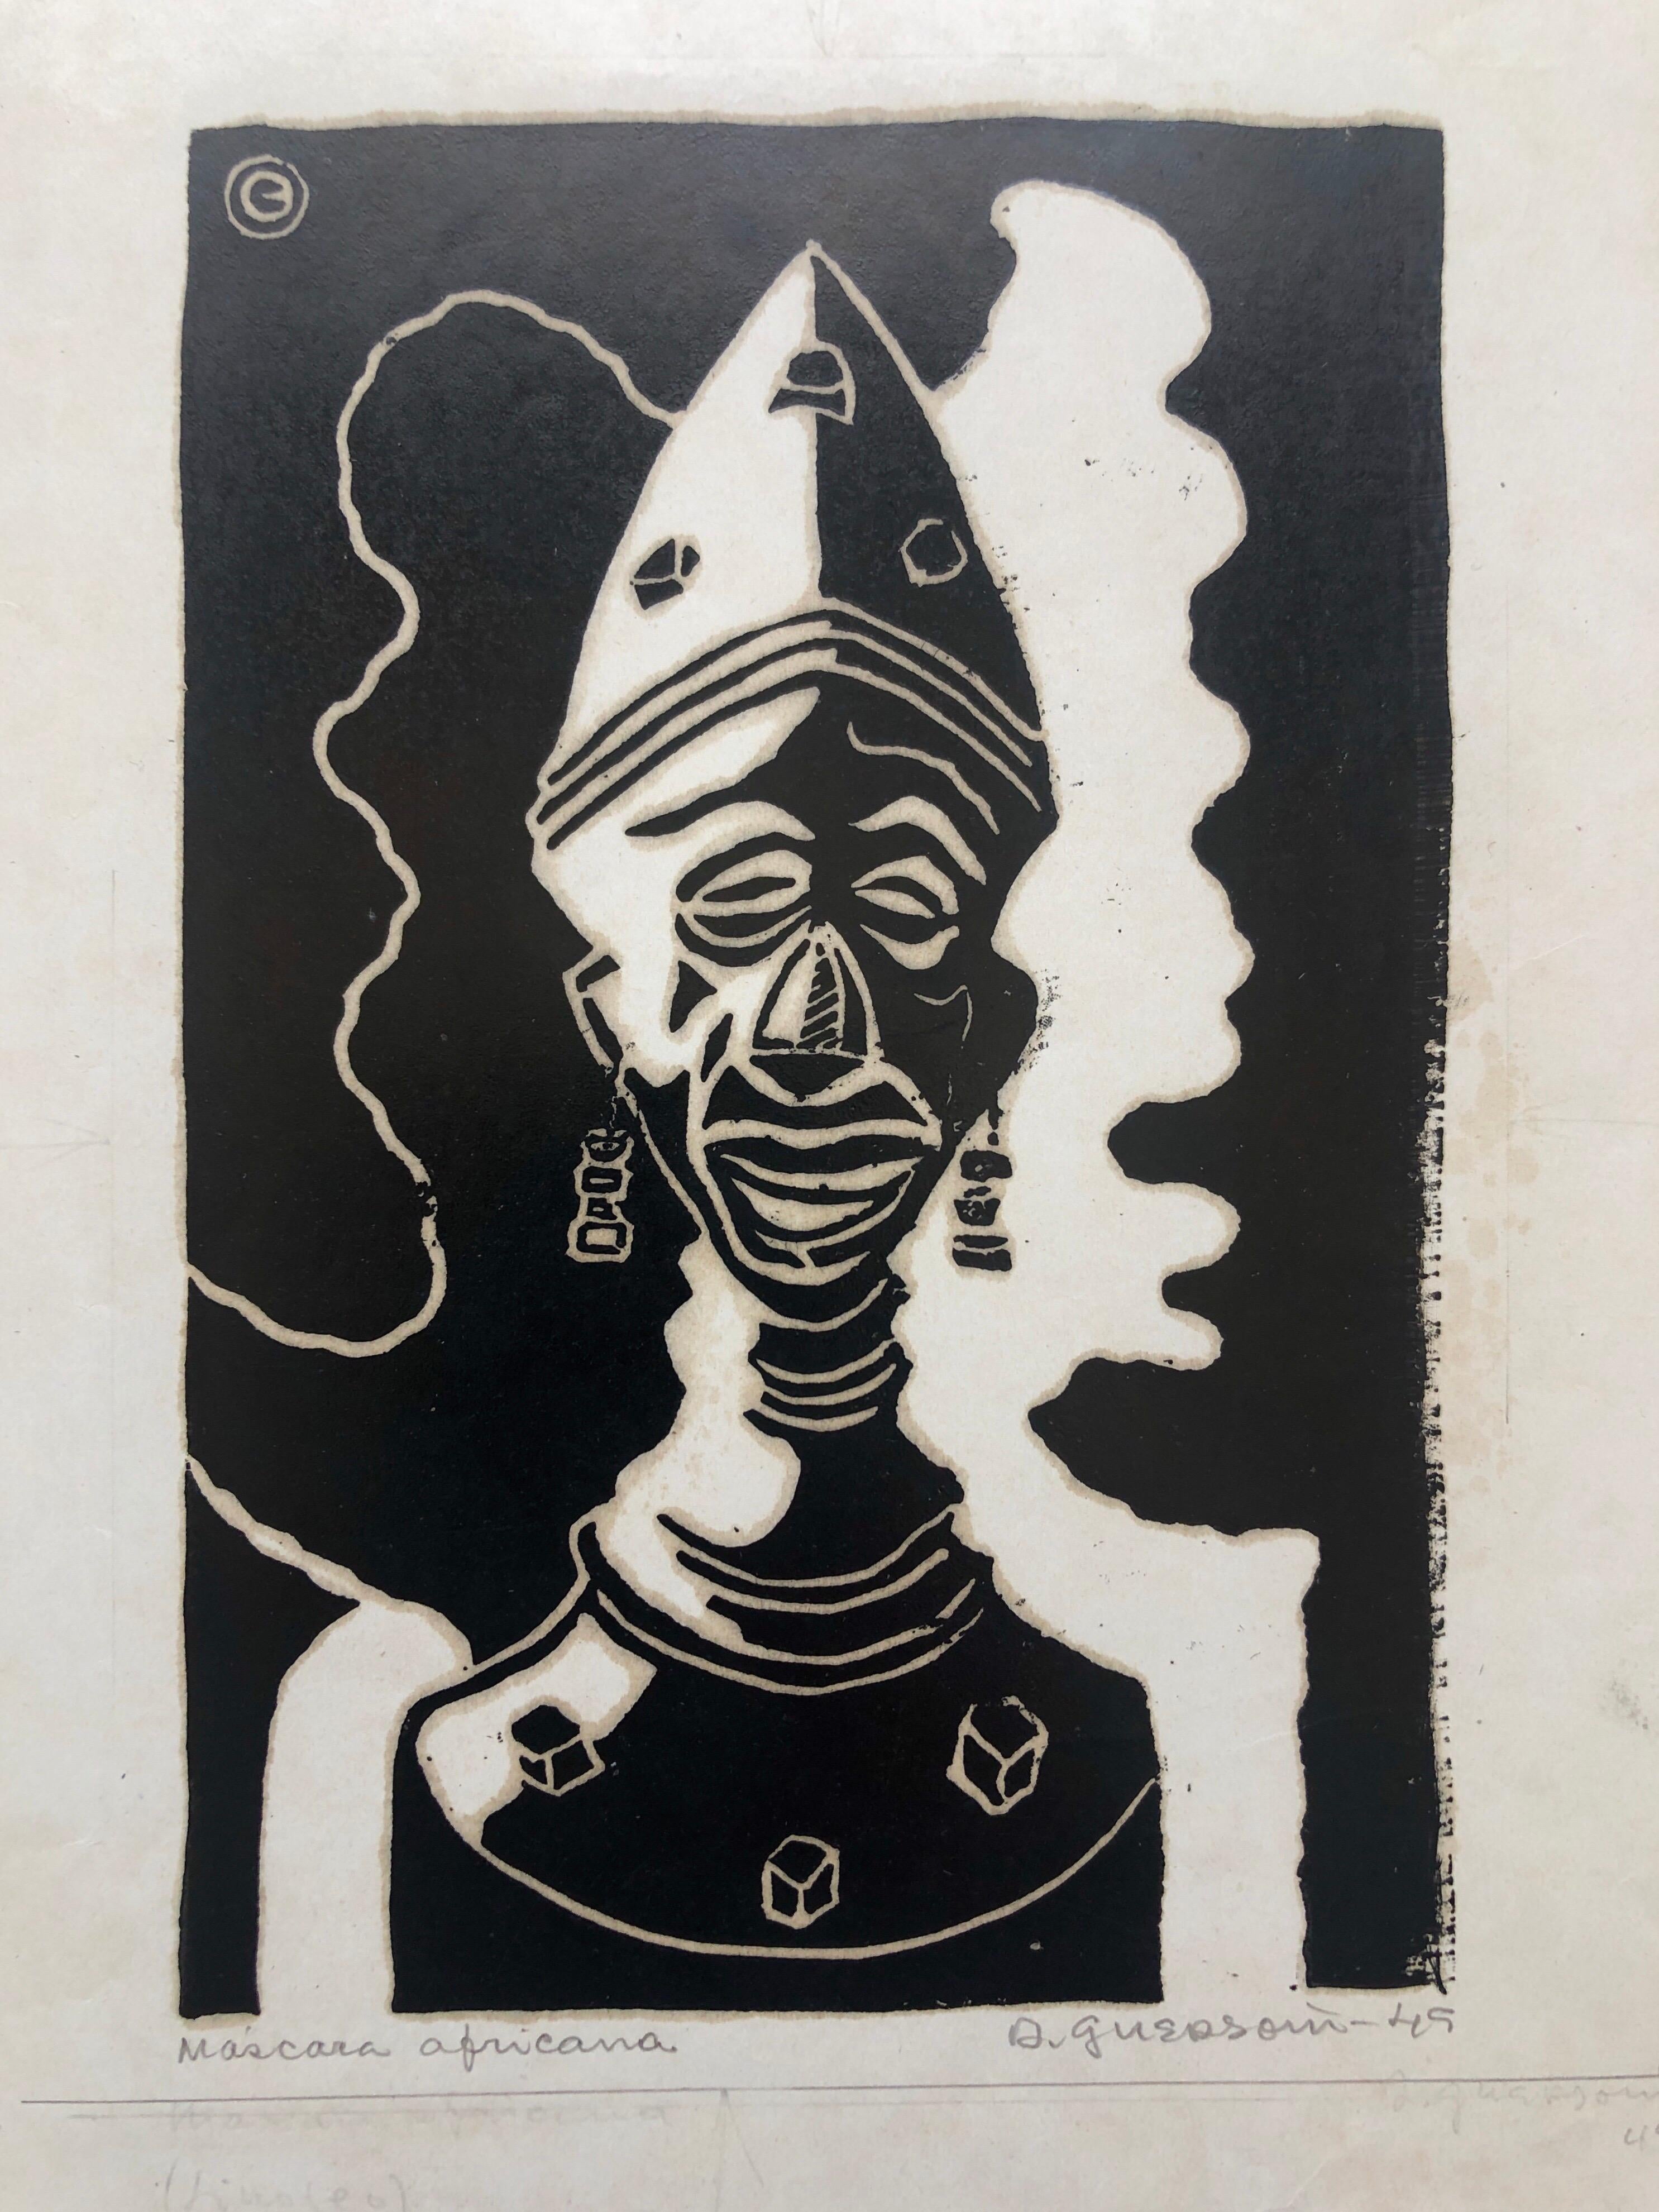 1945 Brasilianischer Meister, Art Deco Clown Serigraphie Holzschnitt 